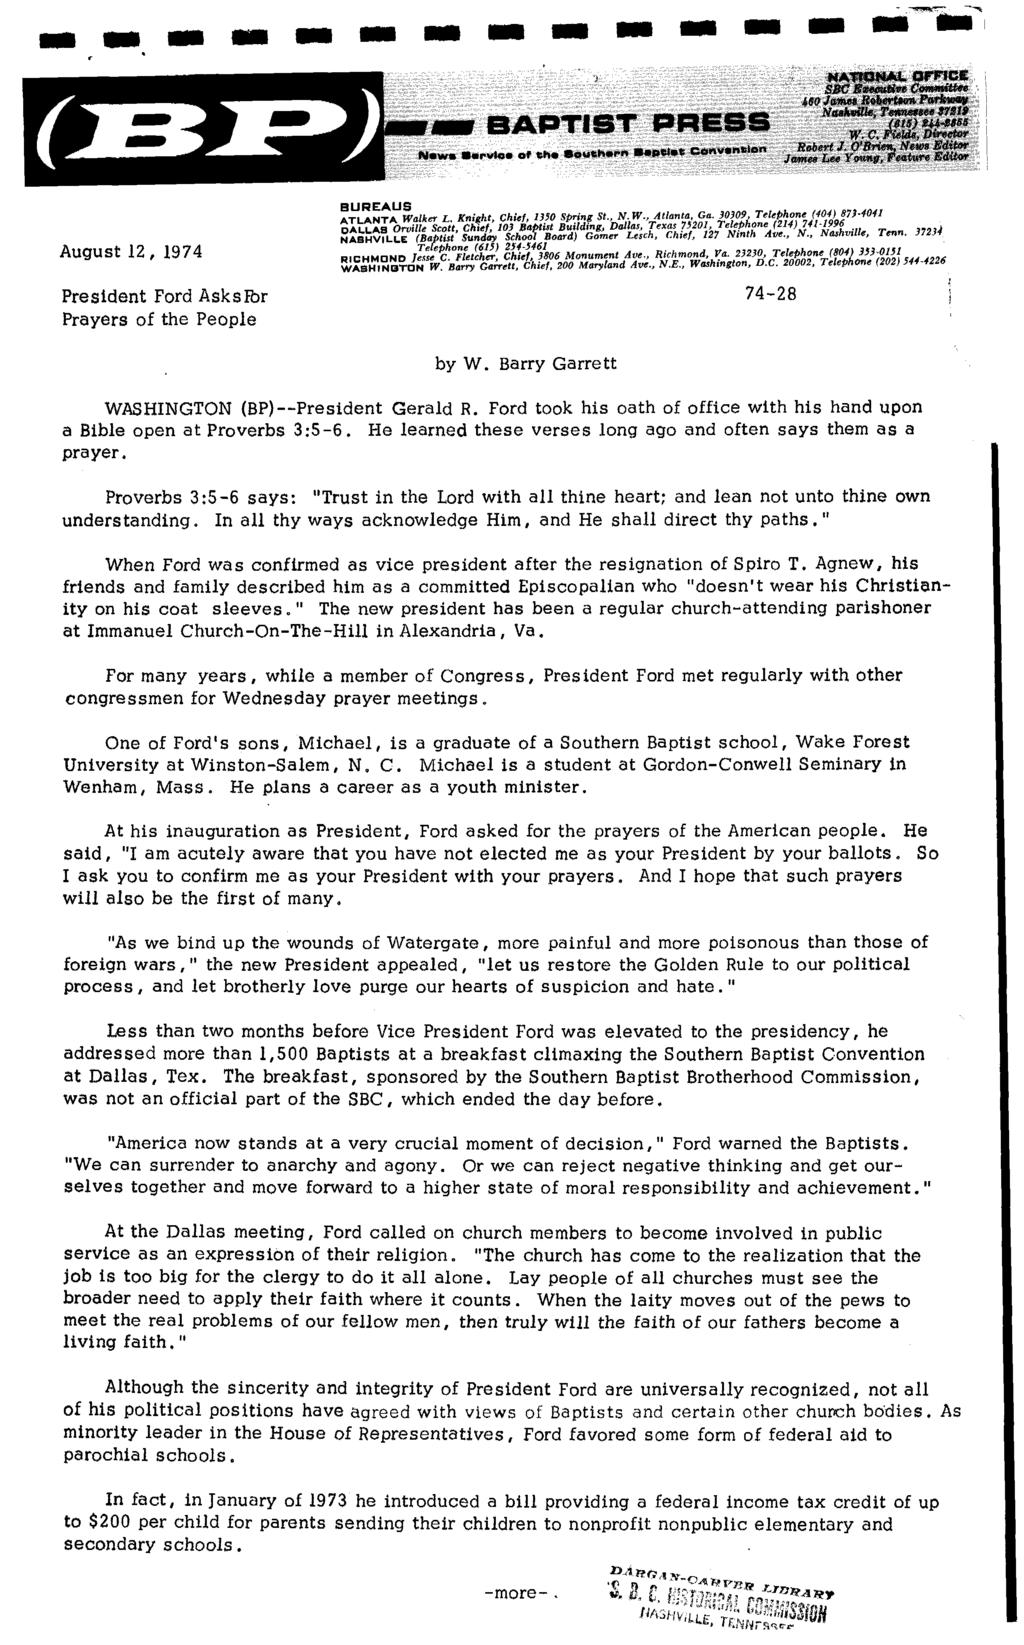 - - - -- ~~. ~ - - - - - - - - - "I August 12, 1974 President Ford Ask s Ior Prayers of the People BUREAUS ATLANTA Walker L. Kni~ht Chief, 1350 Spring st., N. W., Atlant«, Ga.